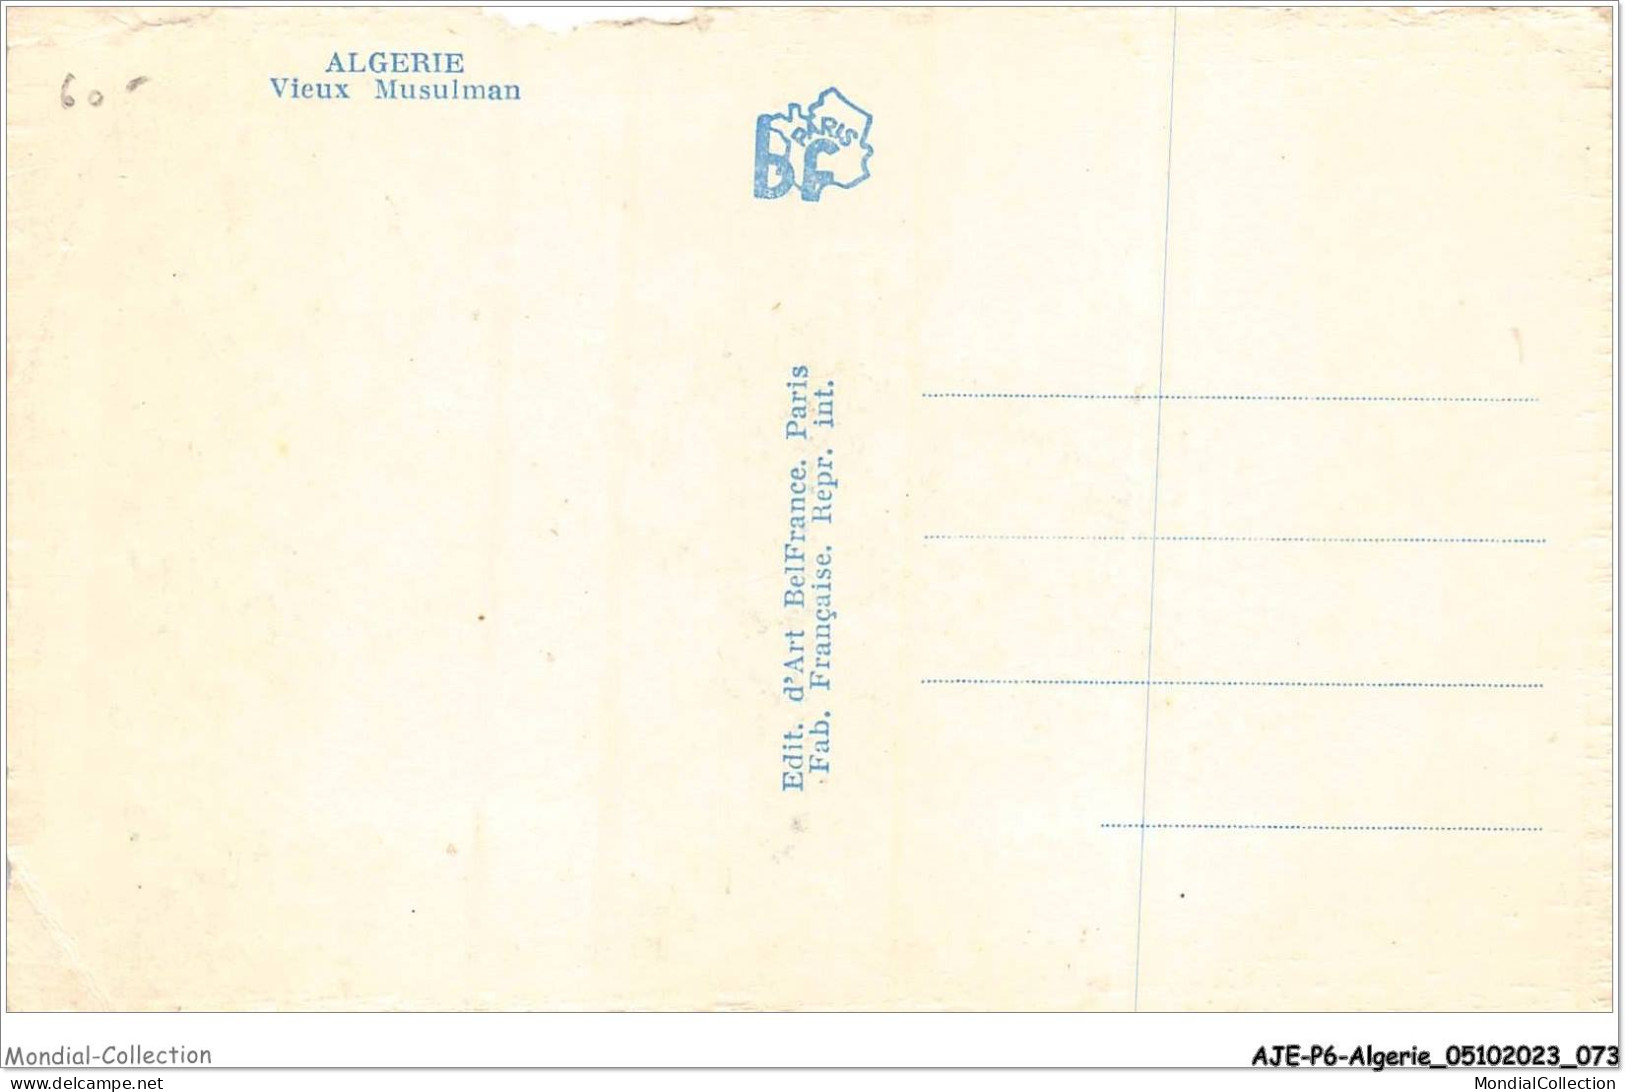 AJEP6-ALGERIE-0543 - ALGERIE - Vieux Musulman - Männer